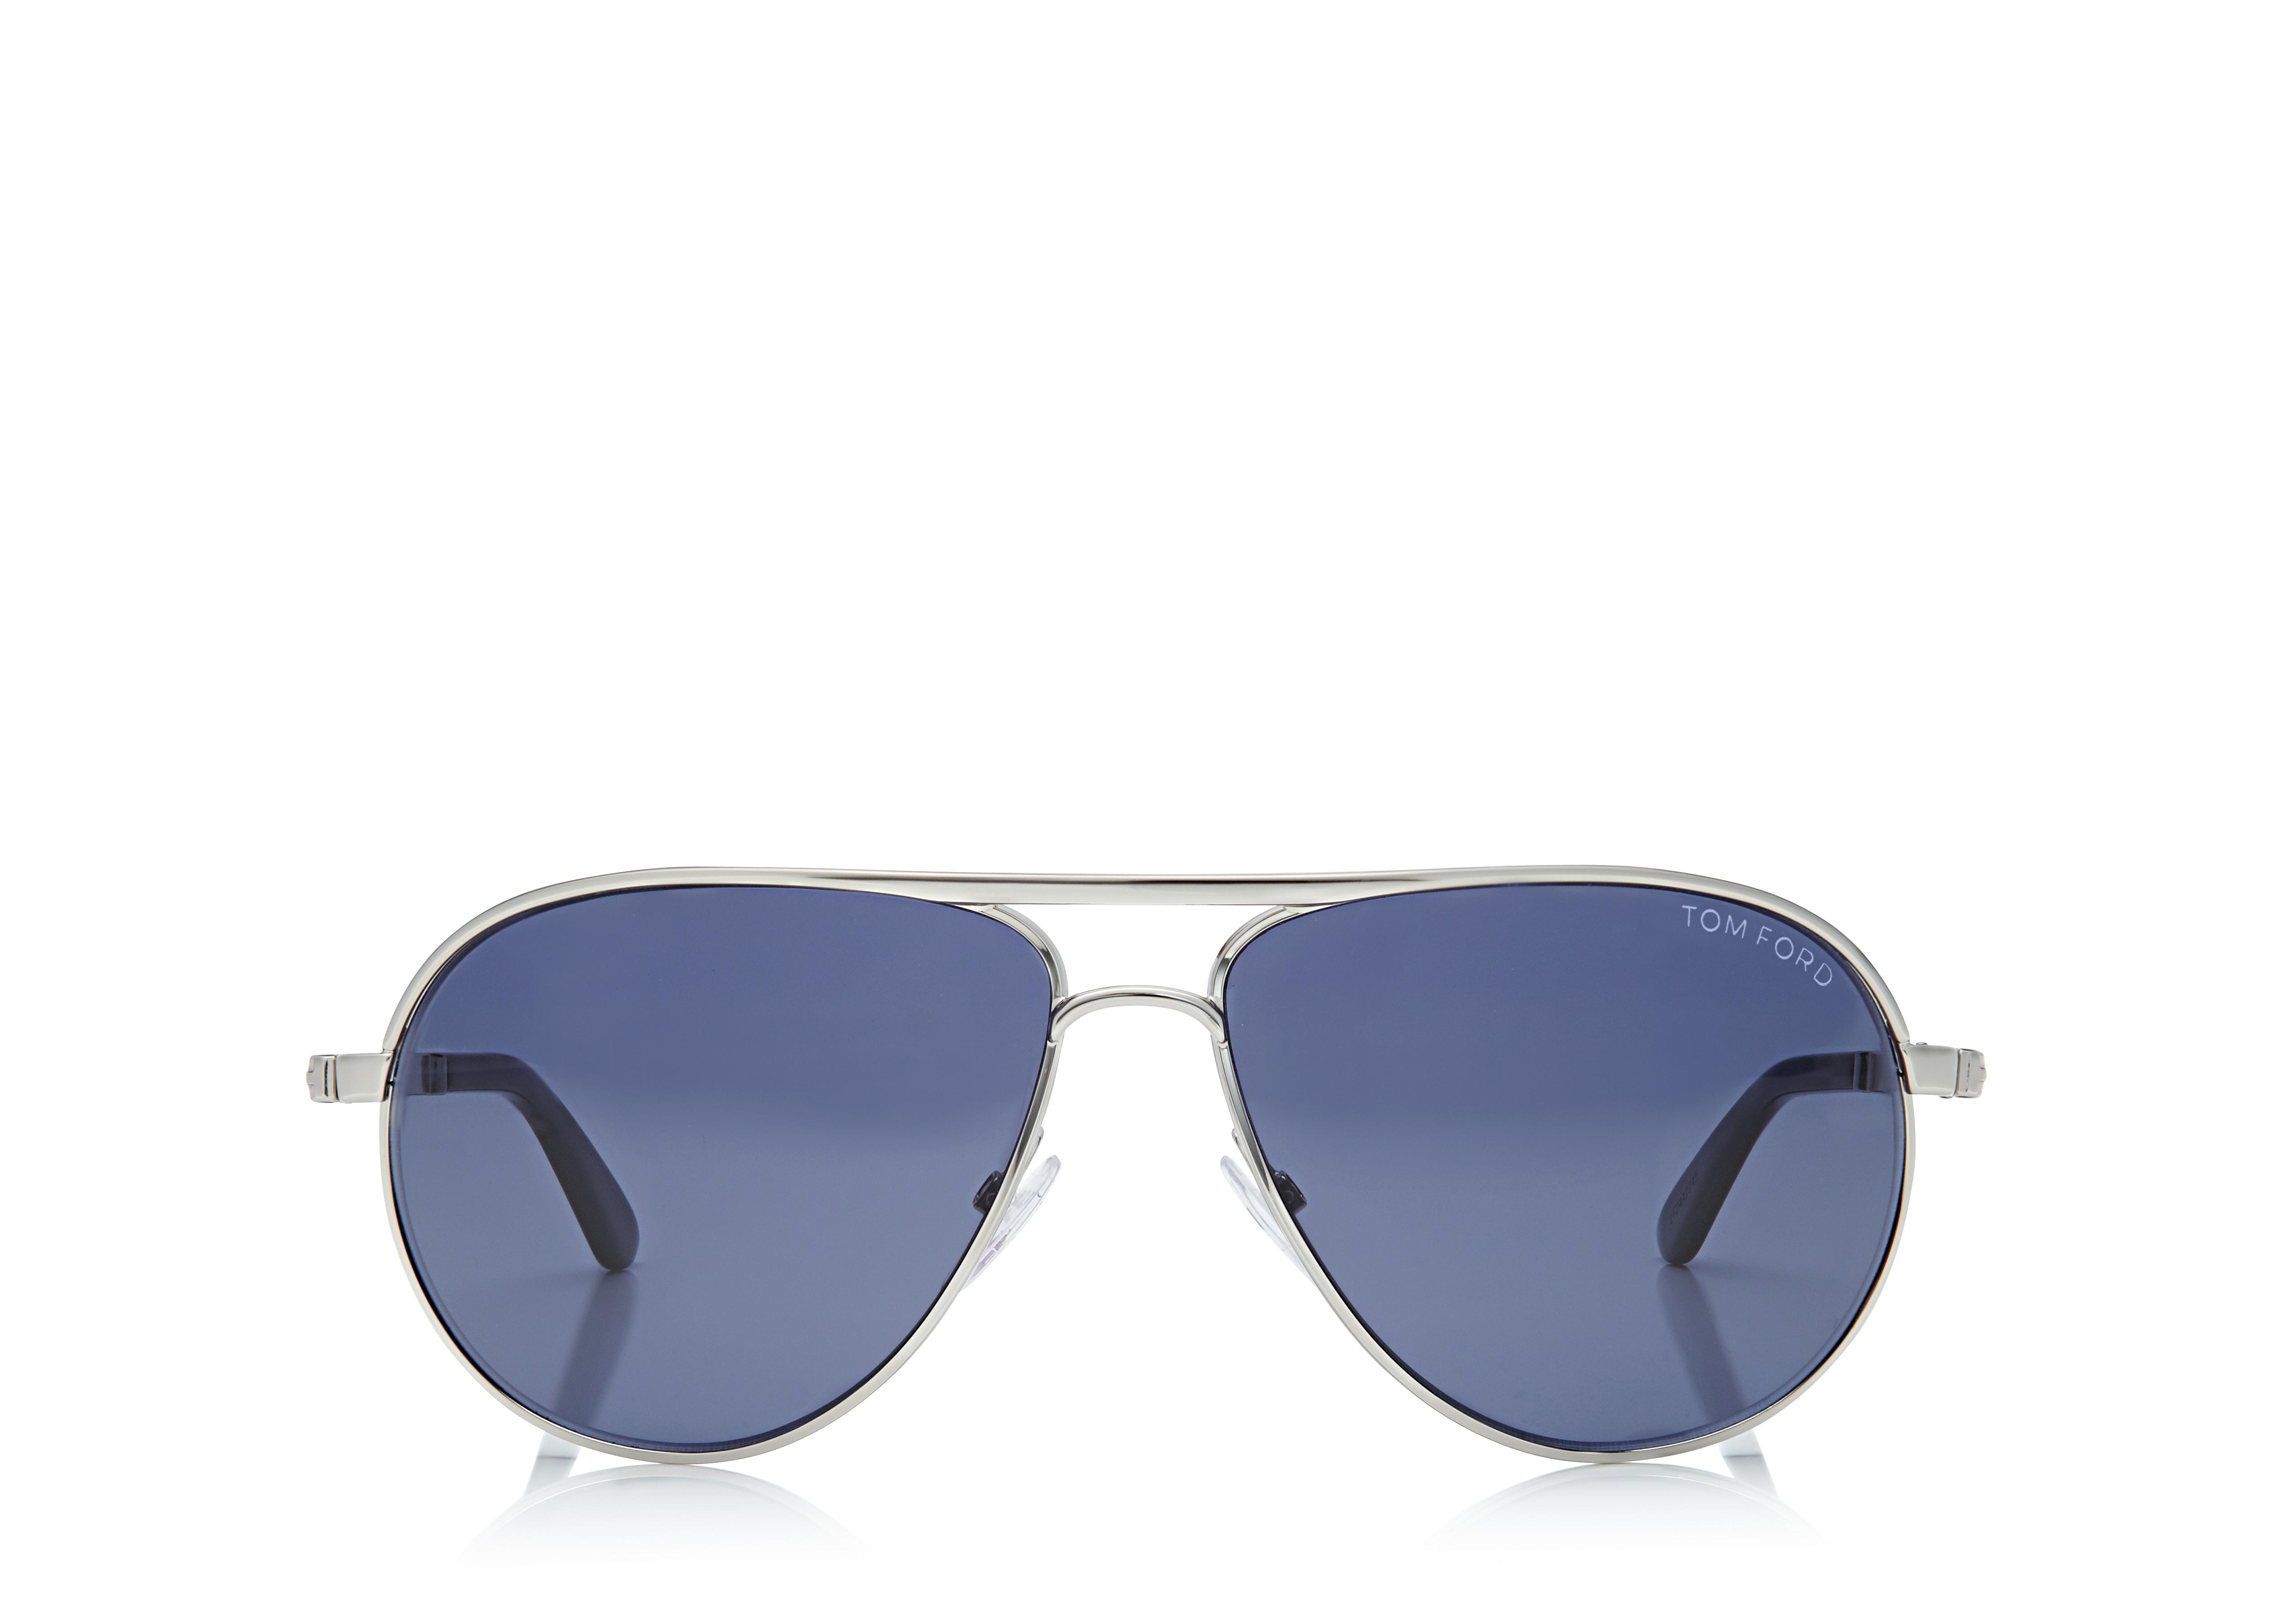 tom ford marko aviator sunglasses,cheap - OFF 50% 